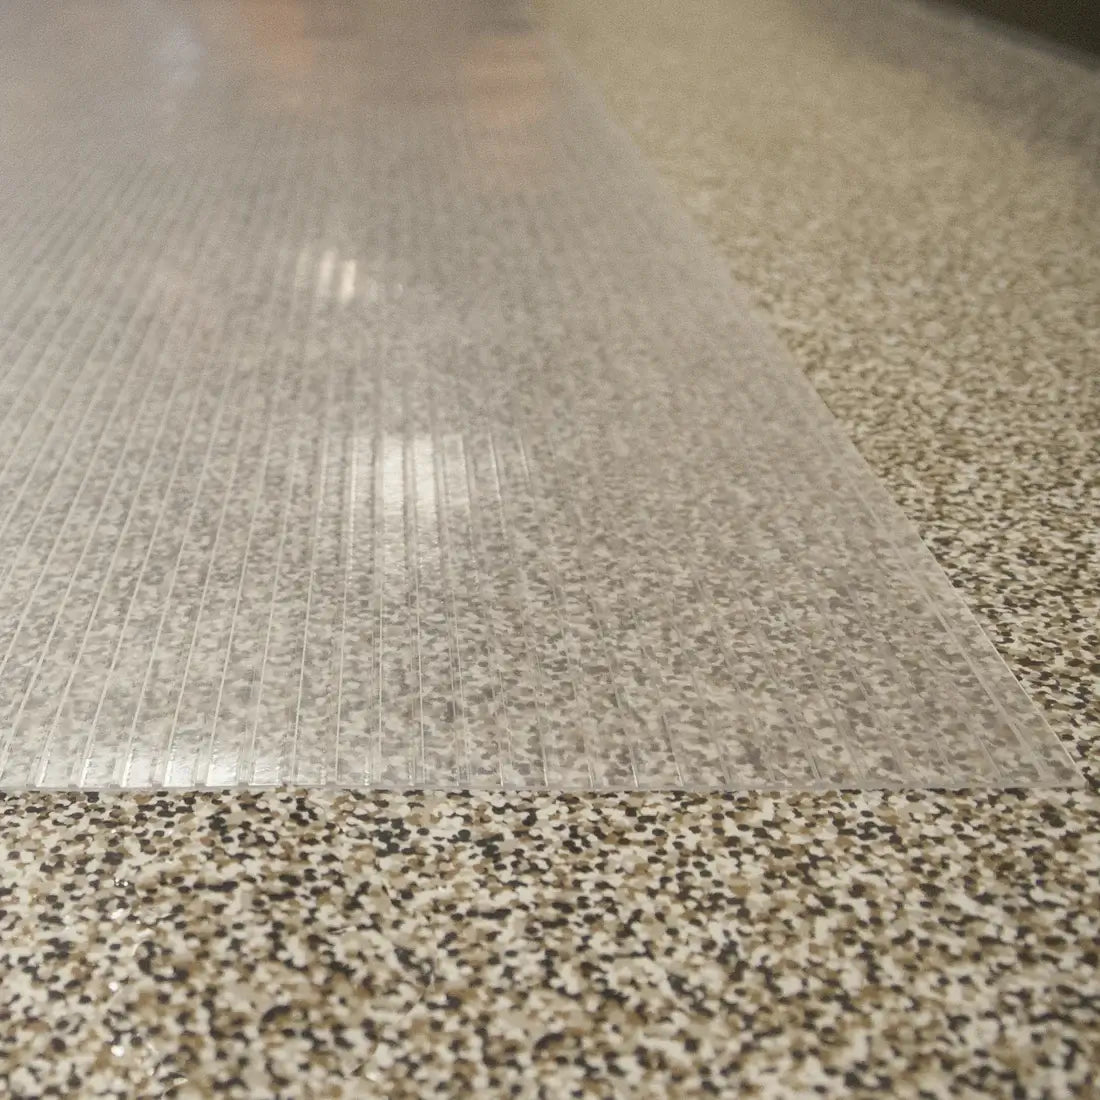 Ceramic Protective Flooring Shield